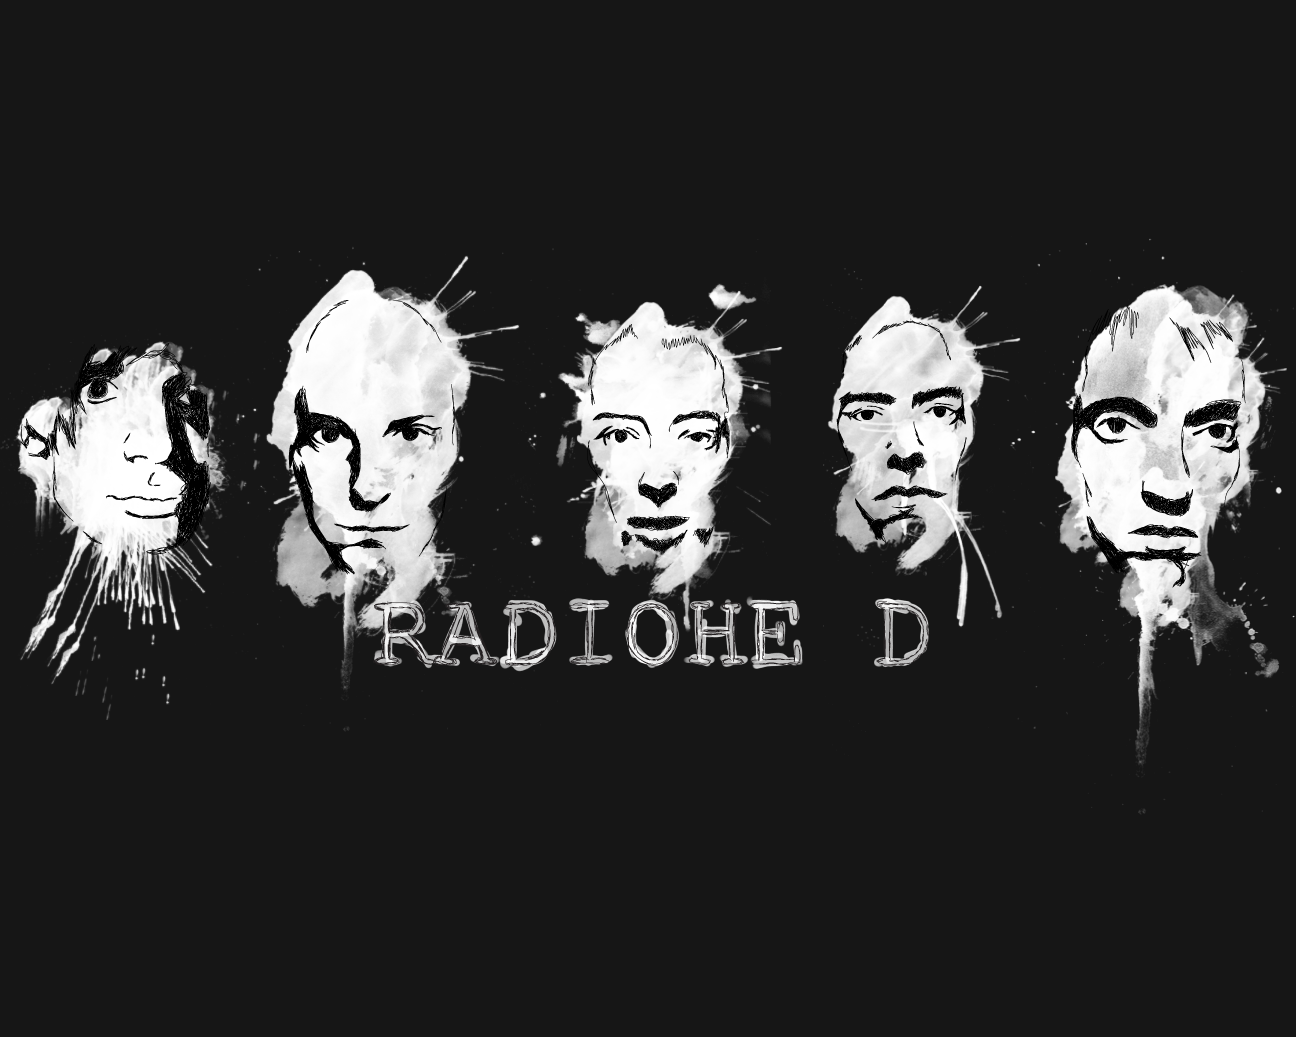 Its all right. Radiohead логотип группы. Радиохед лого. Группа радиохед обложка. Группа Radiohead рисунок.